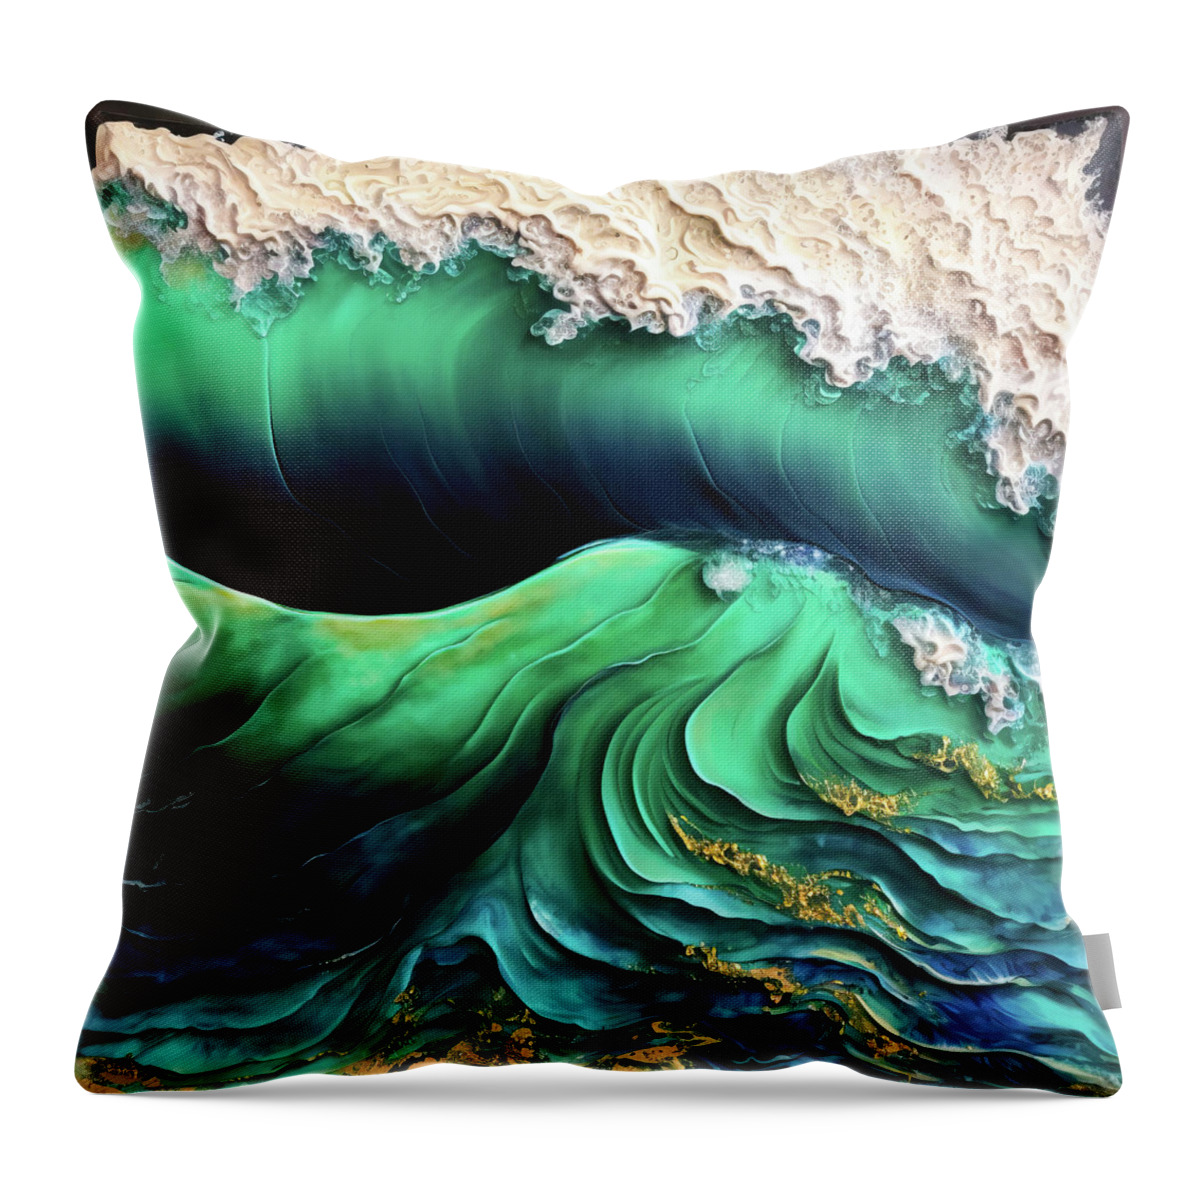 Waves Throw Pillow featuring the digital art Ocean Waves 02 by Matthias Hauser